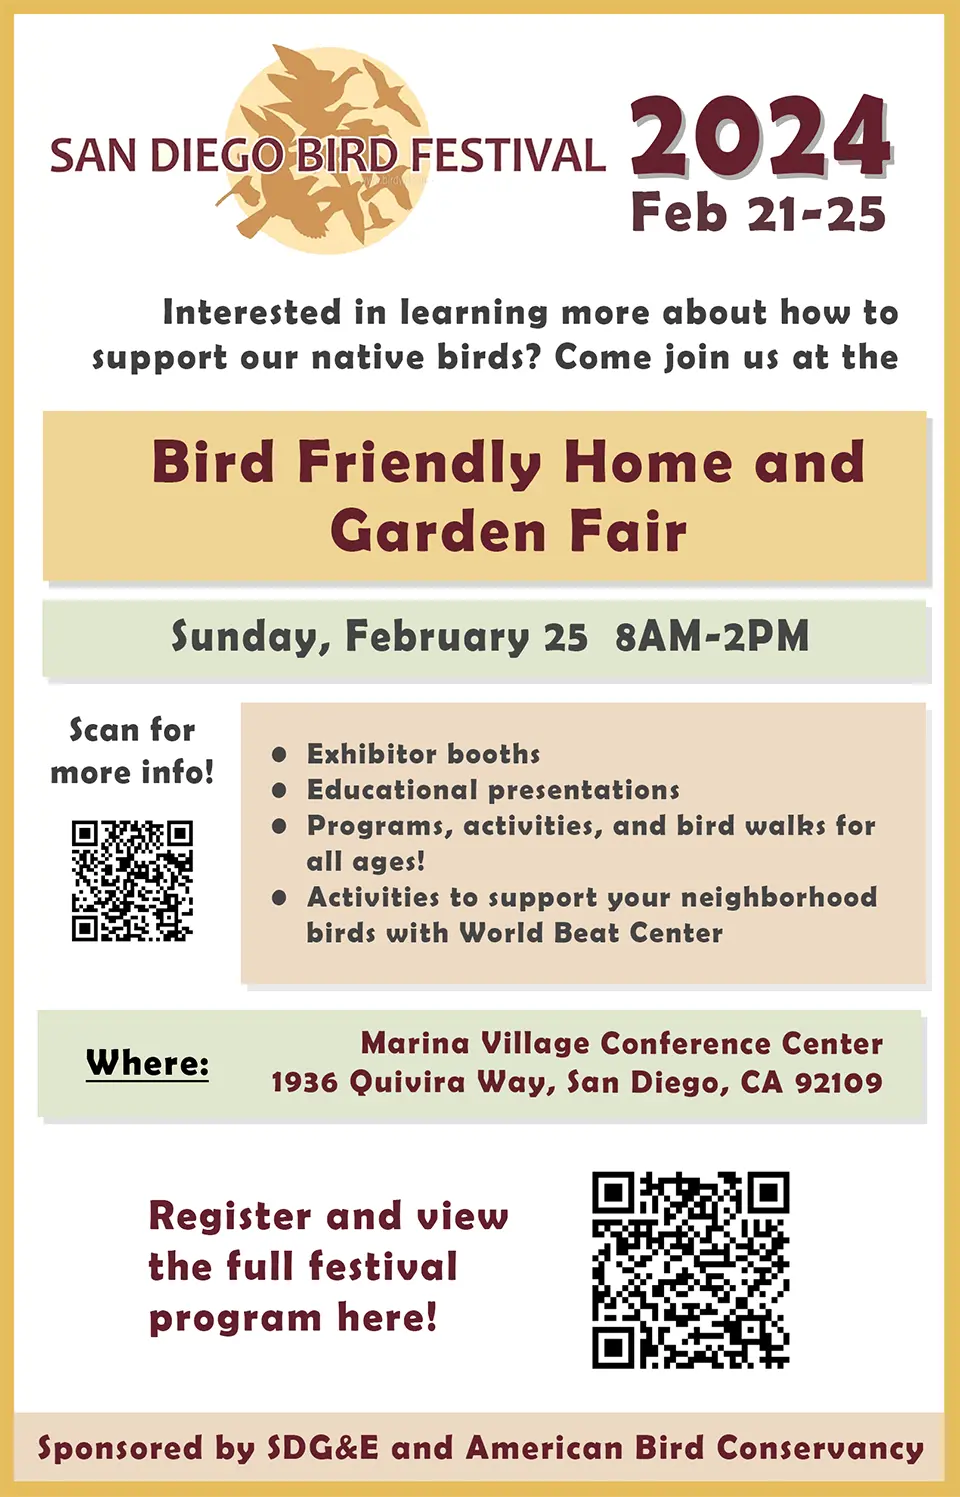 San Diego Bird Festival 2024 Event Flyer